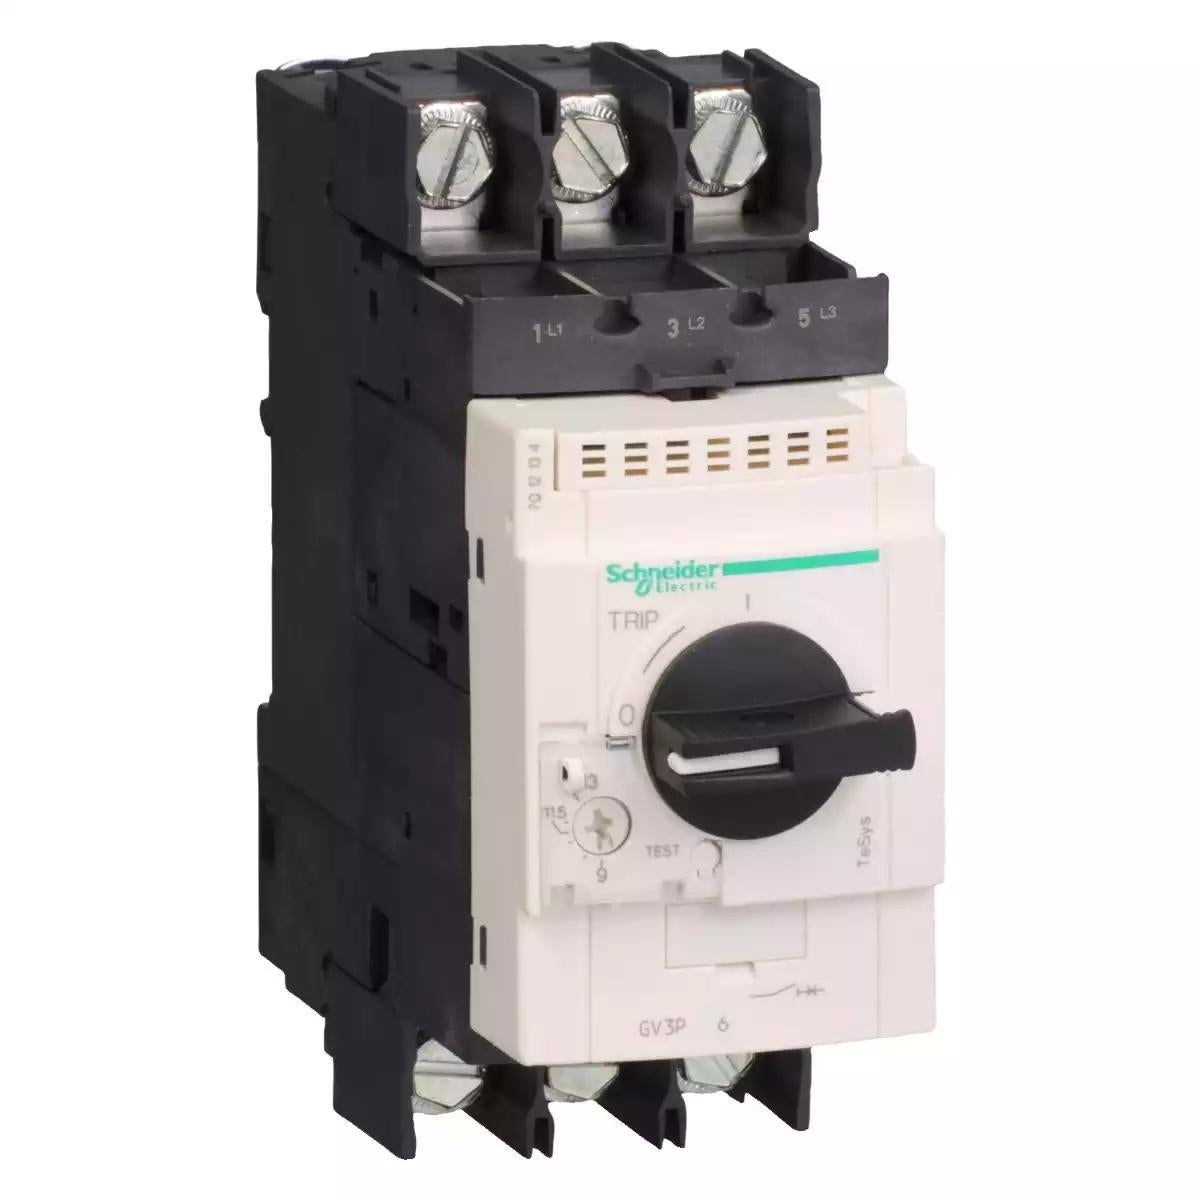 Motor circuit breaker,TeSys Deca frame 3,3P,17-25A,thermal magnetic,lugs terminals